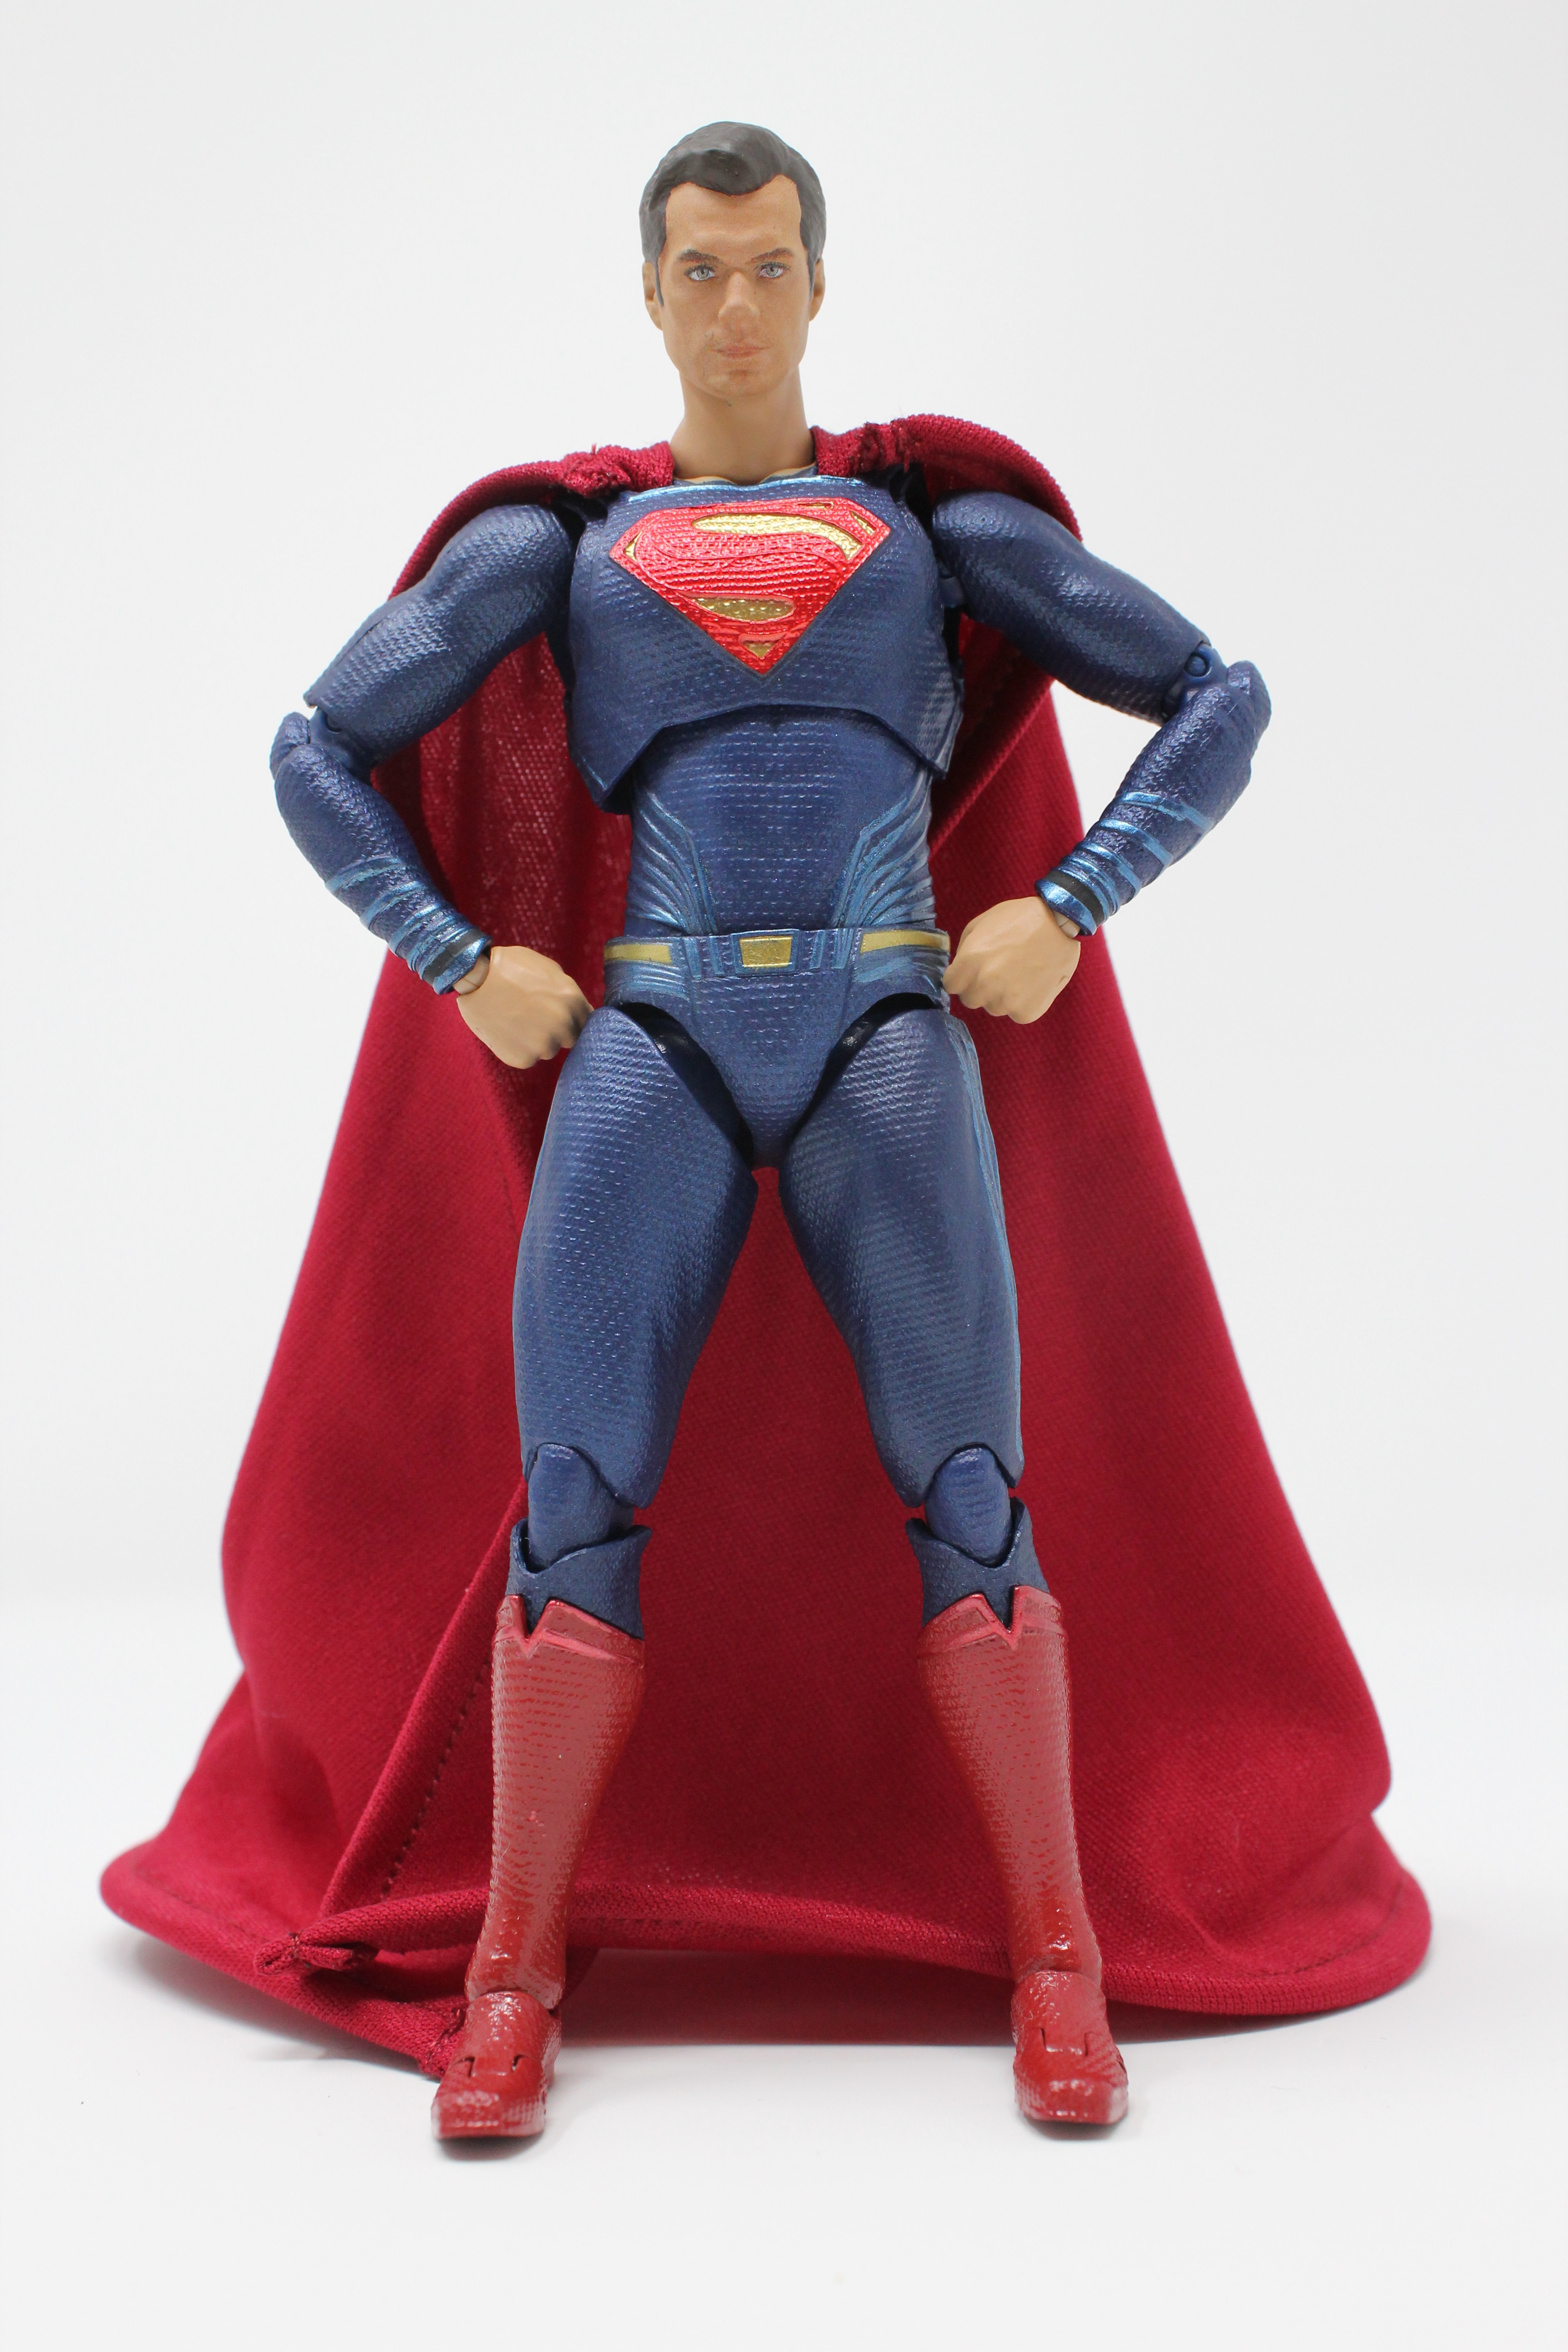 Injustice superman